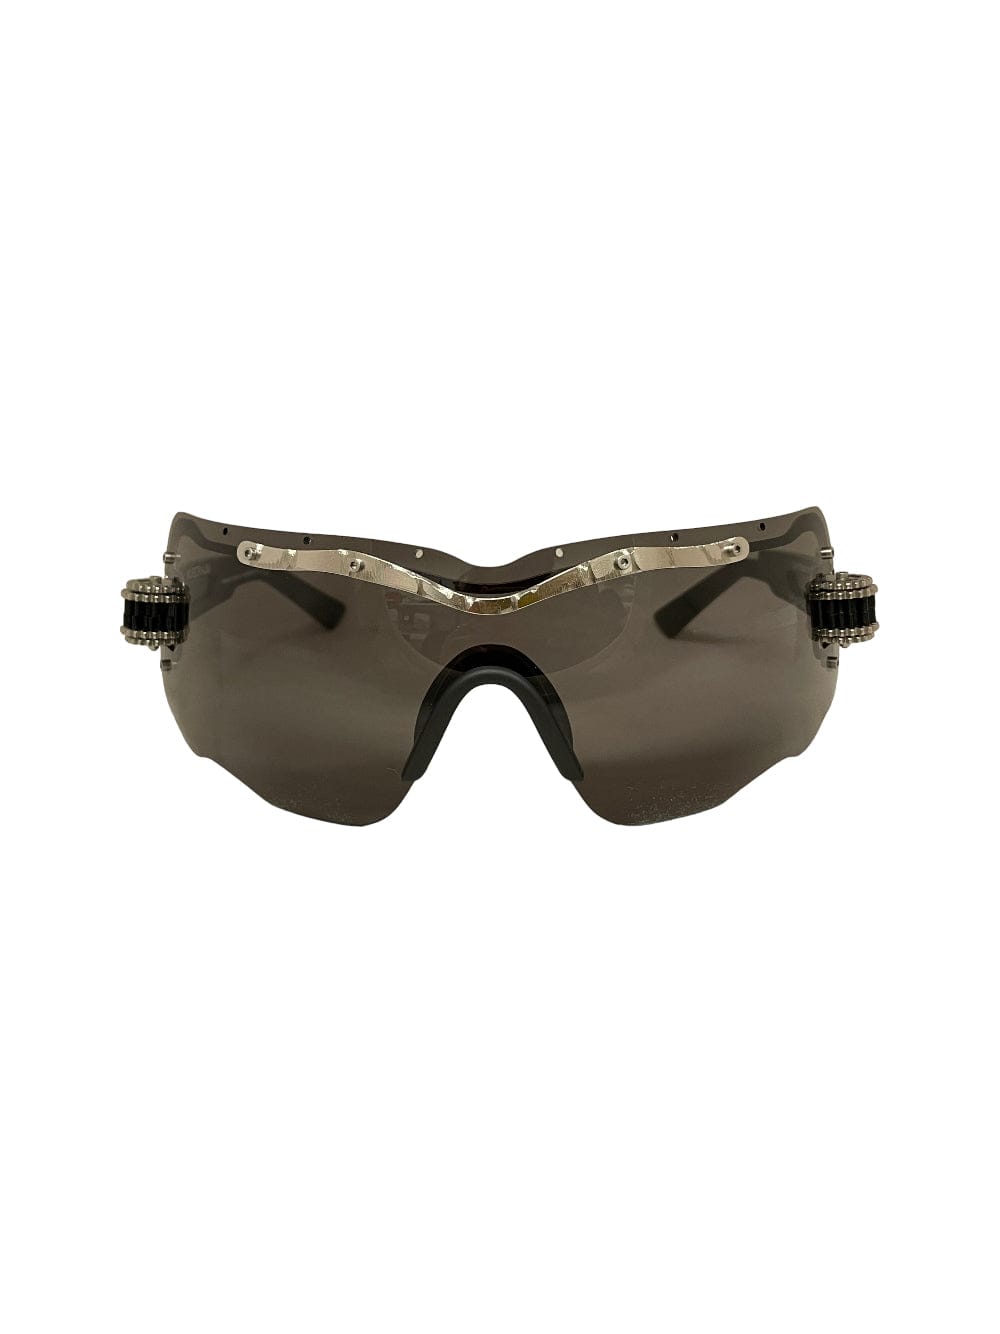 Kuboraum Maske E15 - Black - Limited Edition Livio Graziottin Sunglasses